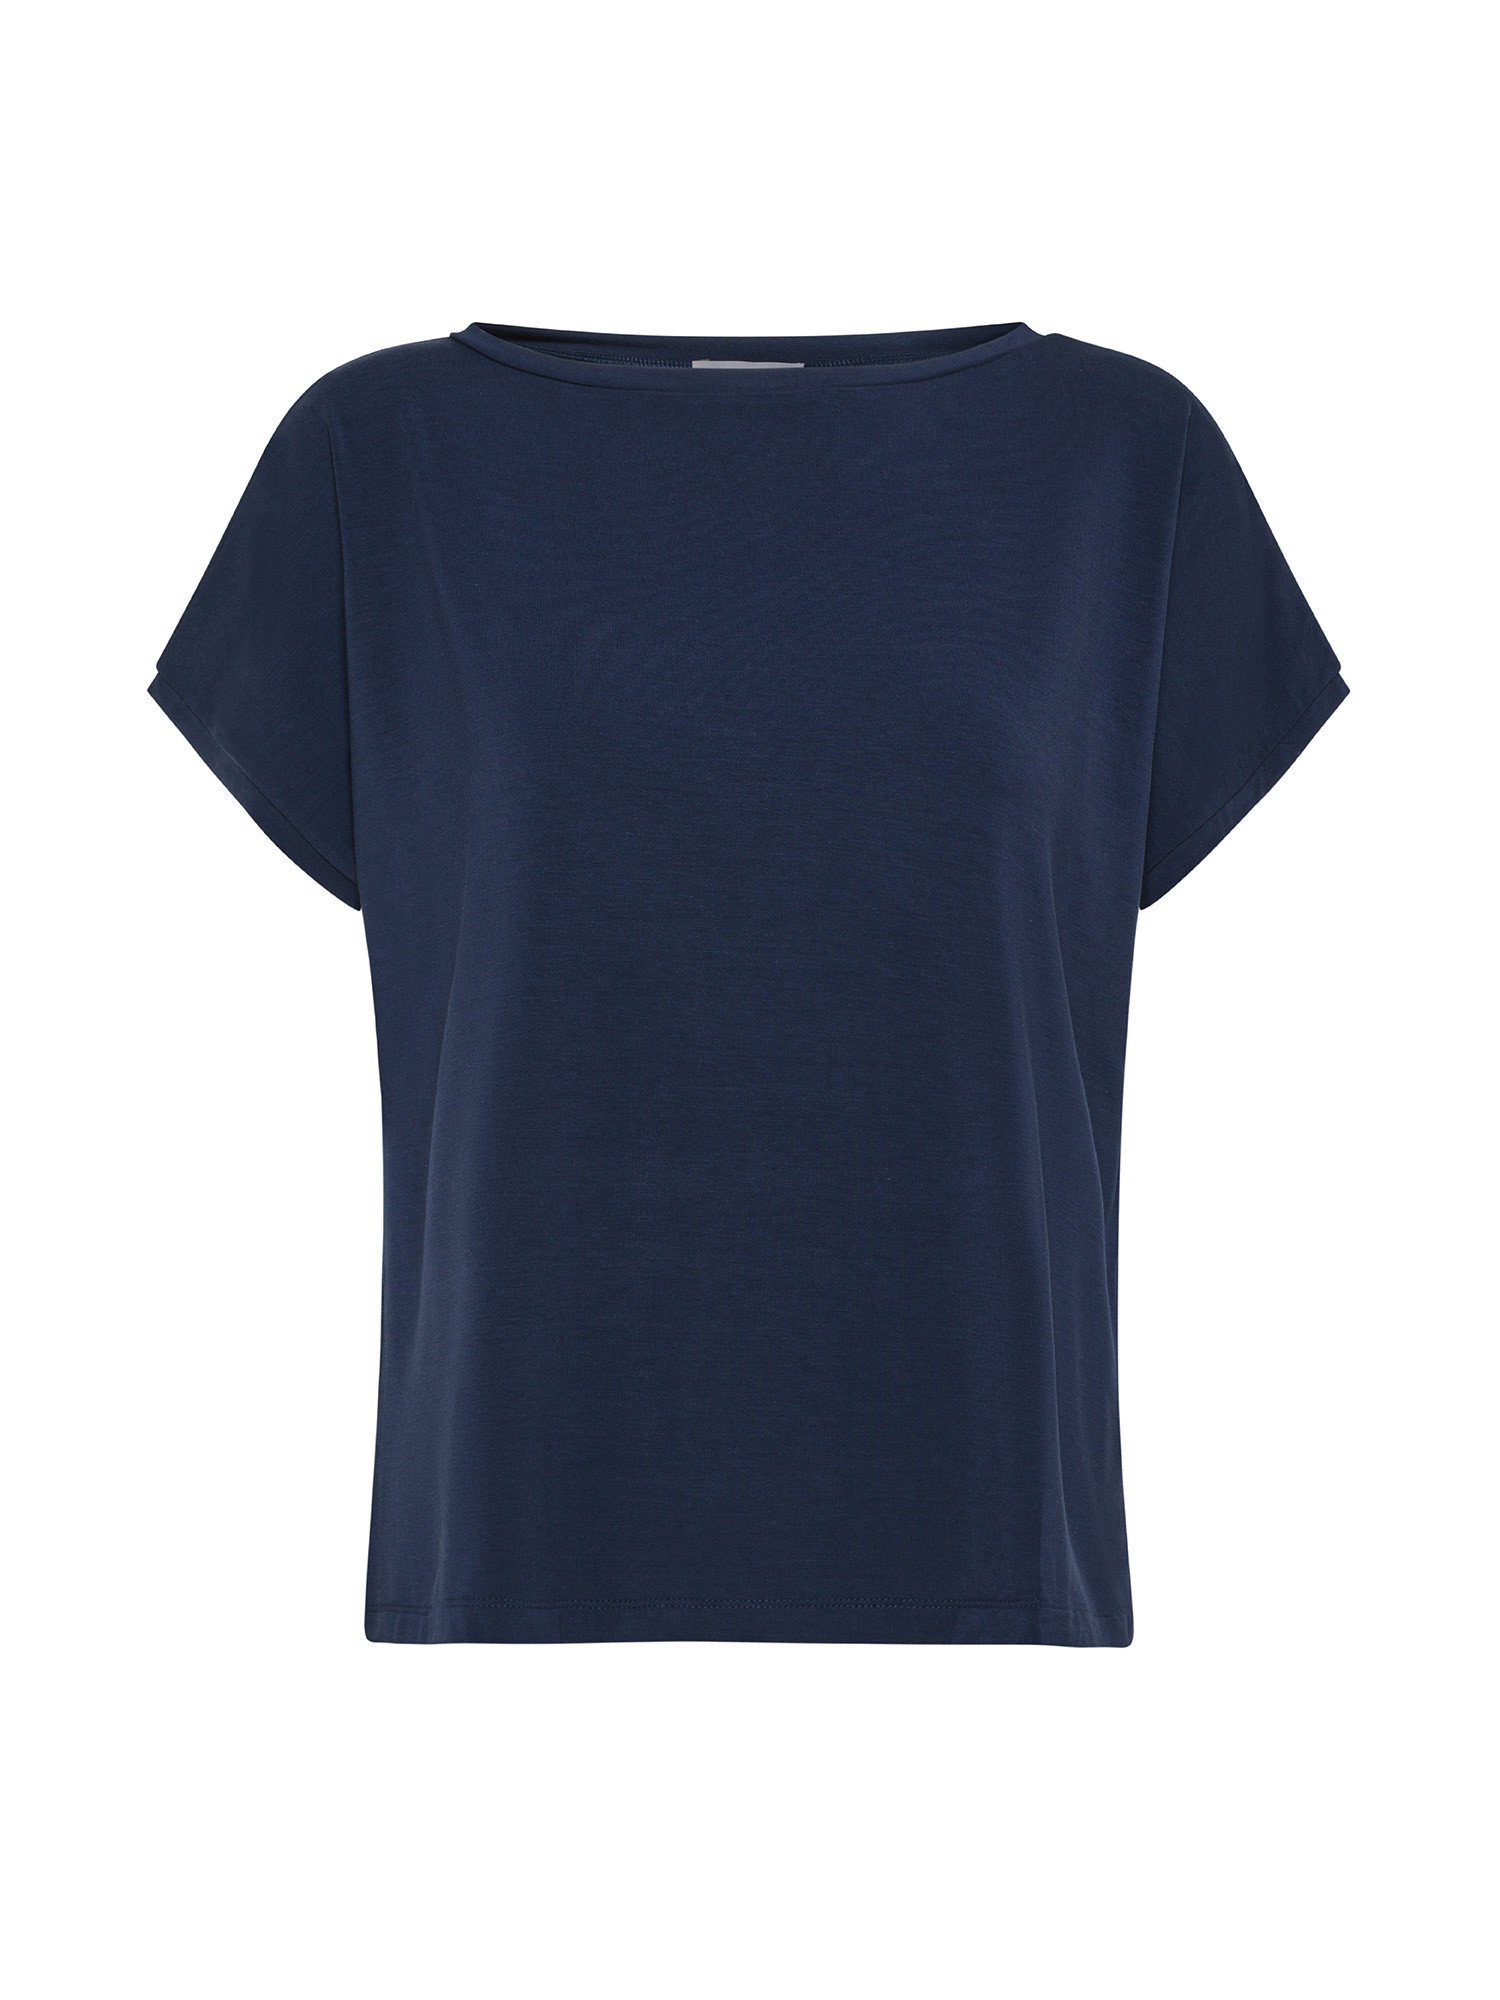 T-shirt in viscosa di bamboo, fresca e leggera., Blue Navy, large image number 0